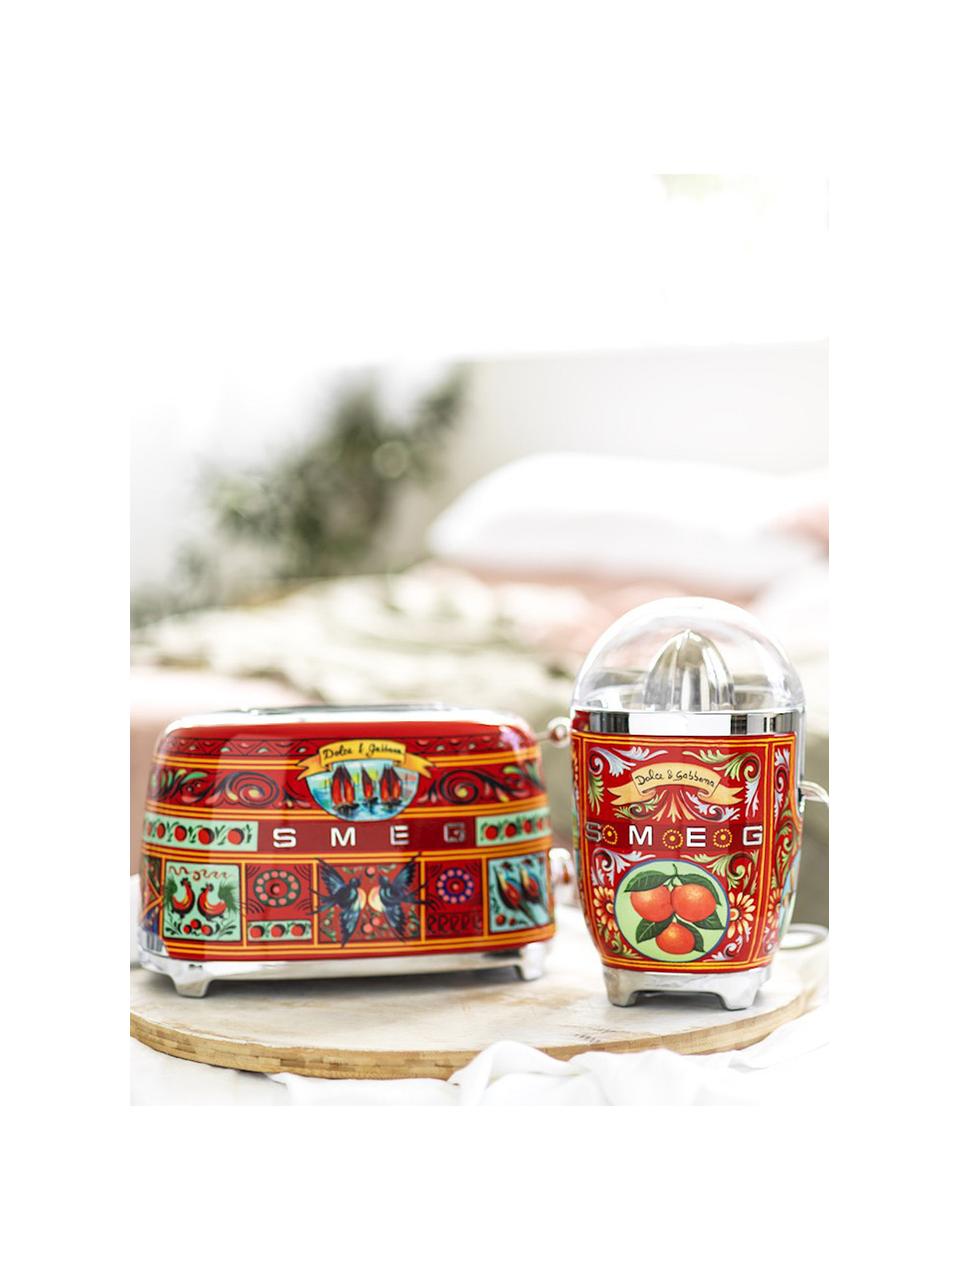 Kompakt Toaster Dolce & Gabbana - Sicily is my Love, Edelstahl, lackiert, Bunt, B 31 x T 20 cm